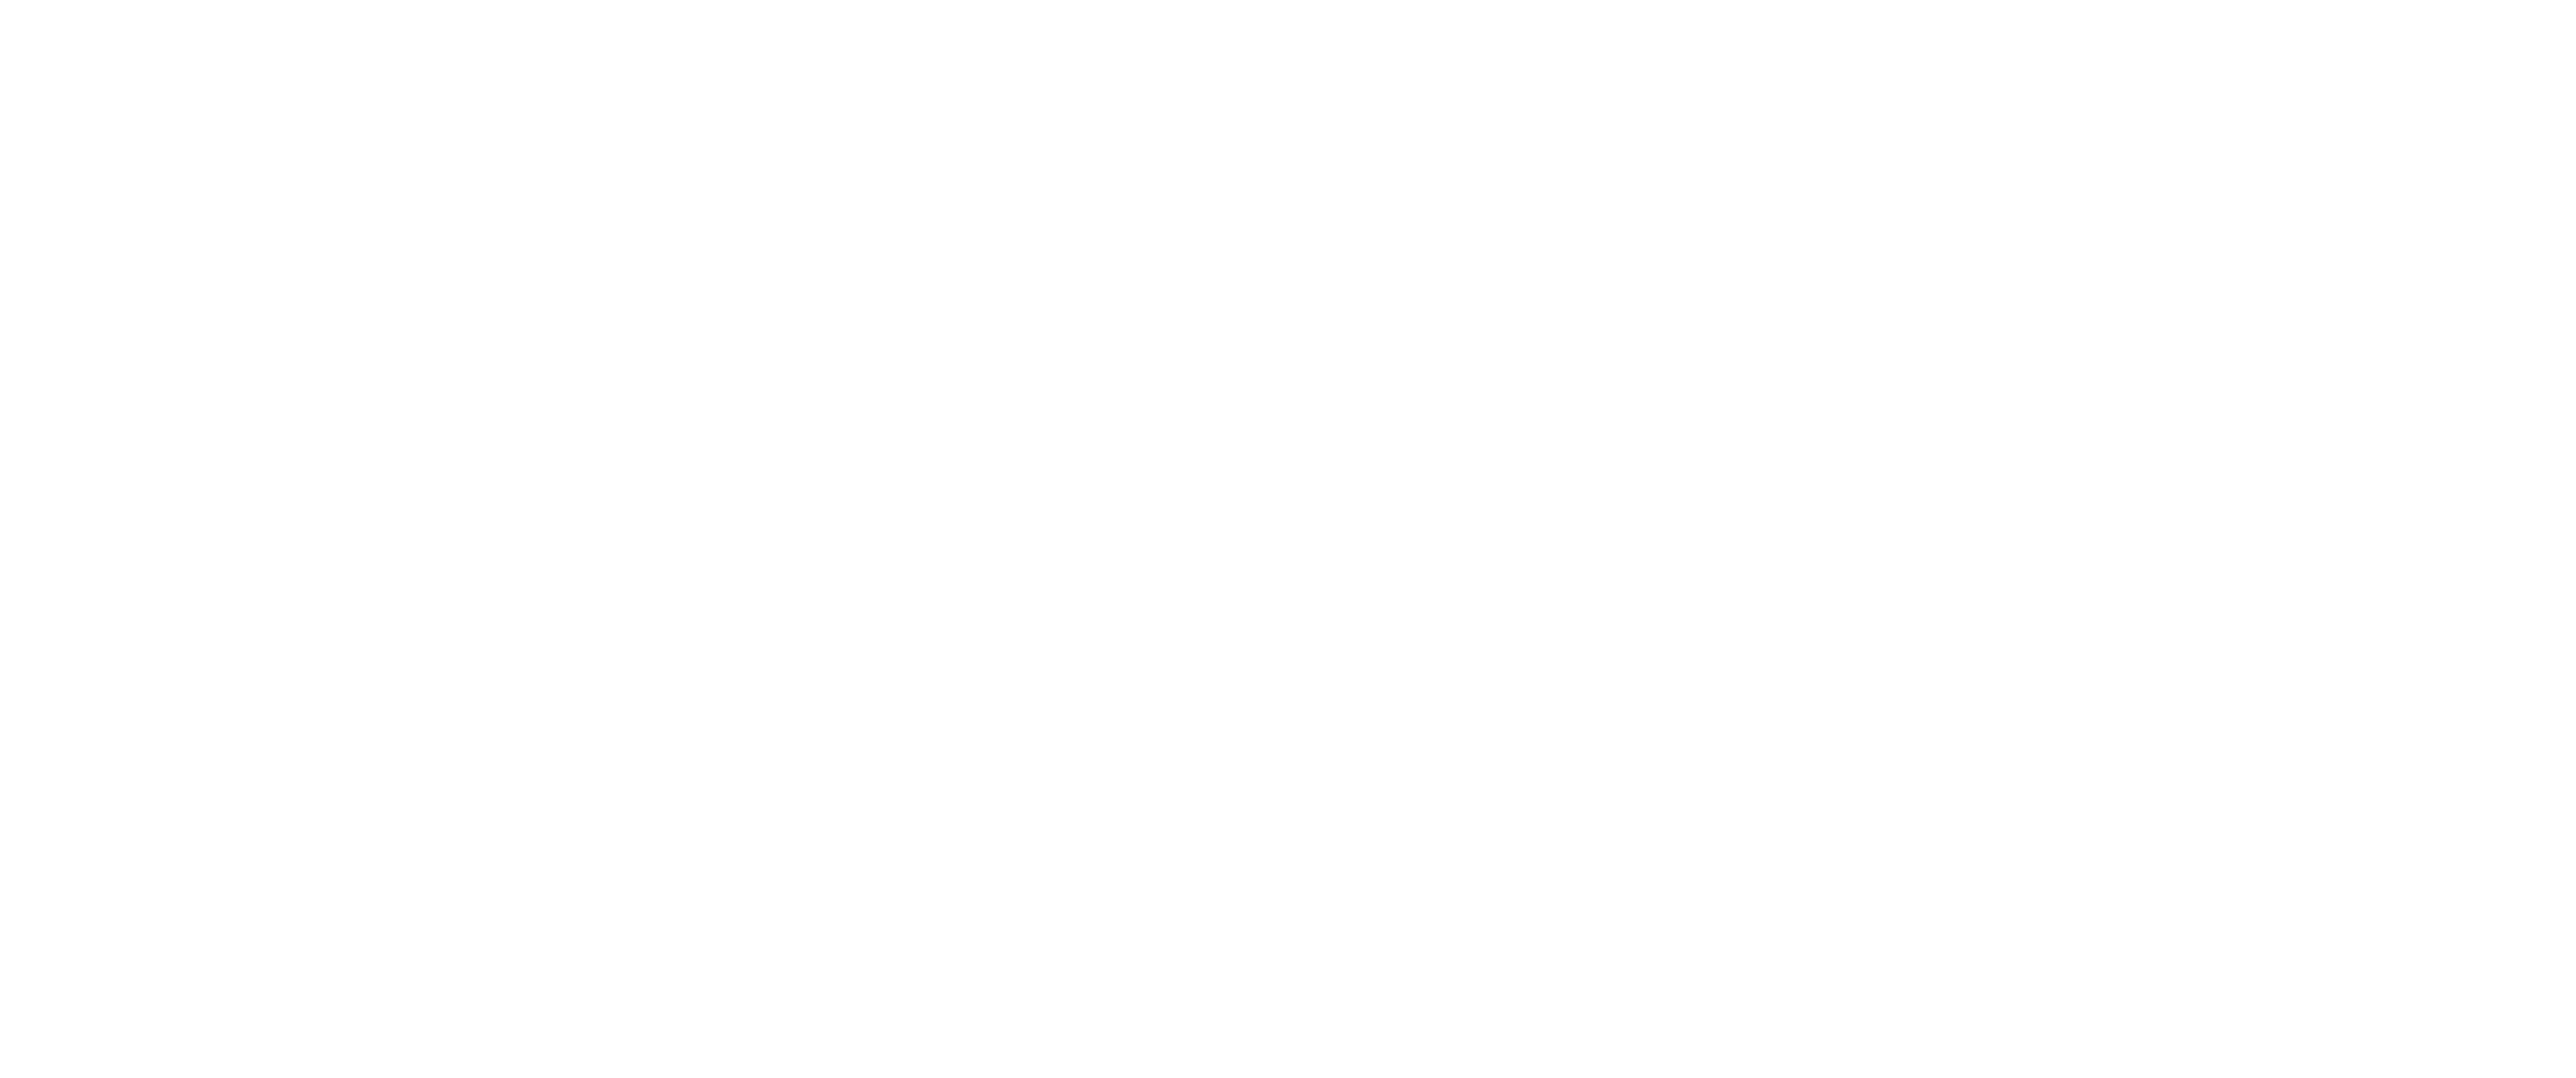 Thomsen Digital